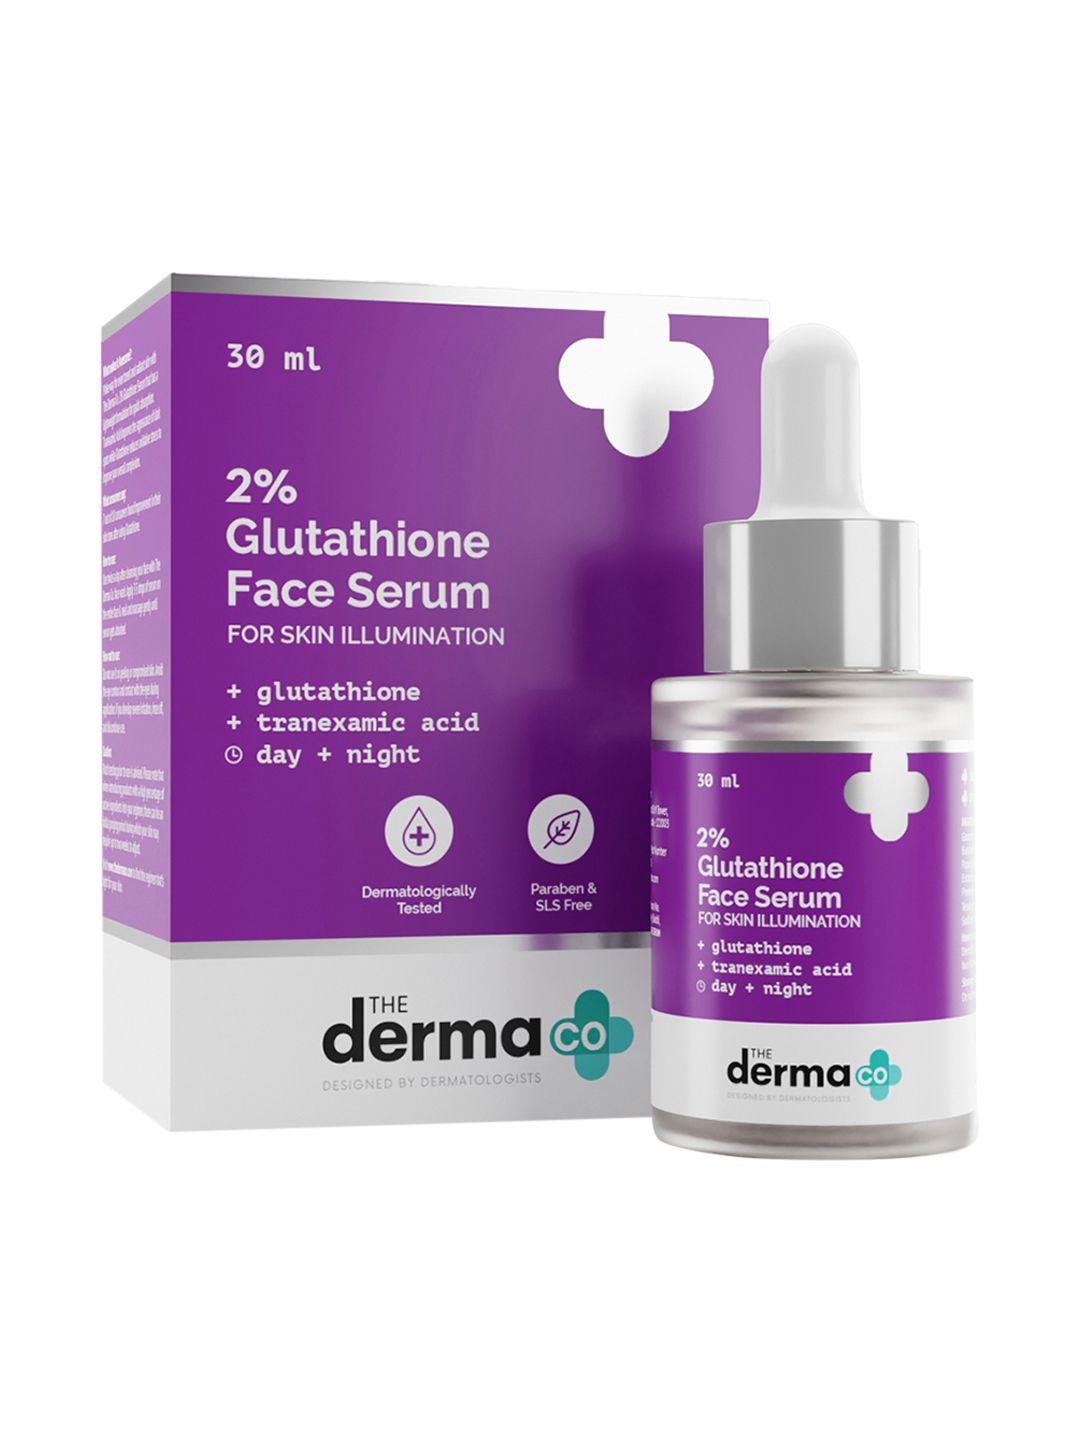 the derma co. 2% glutathione face serum with tranexamic acid for skin illumination - 30ml